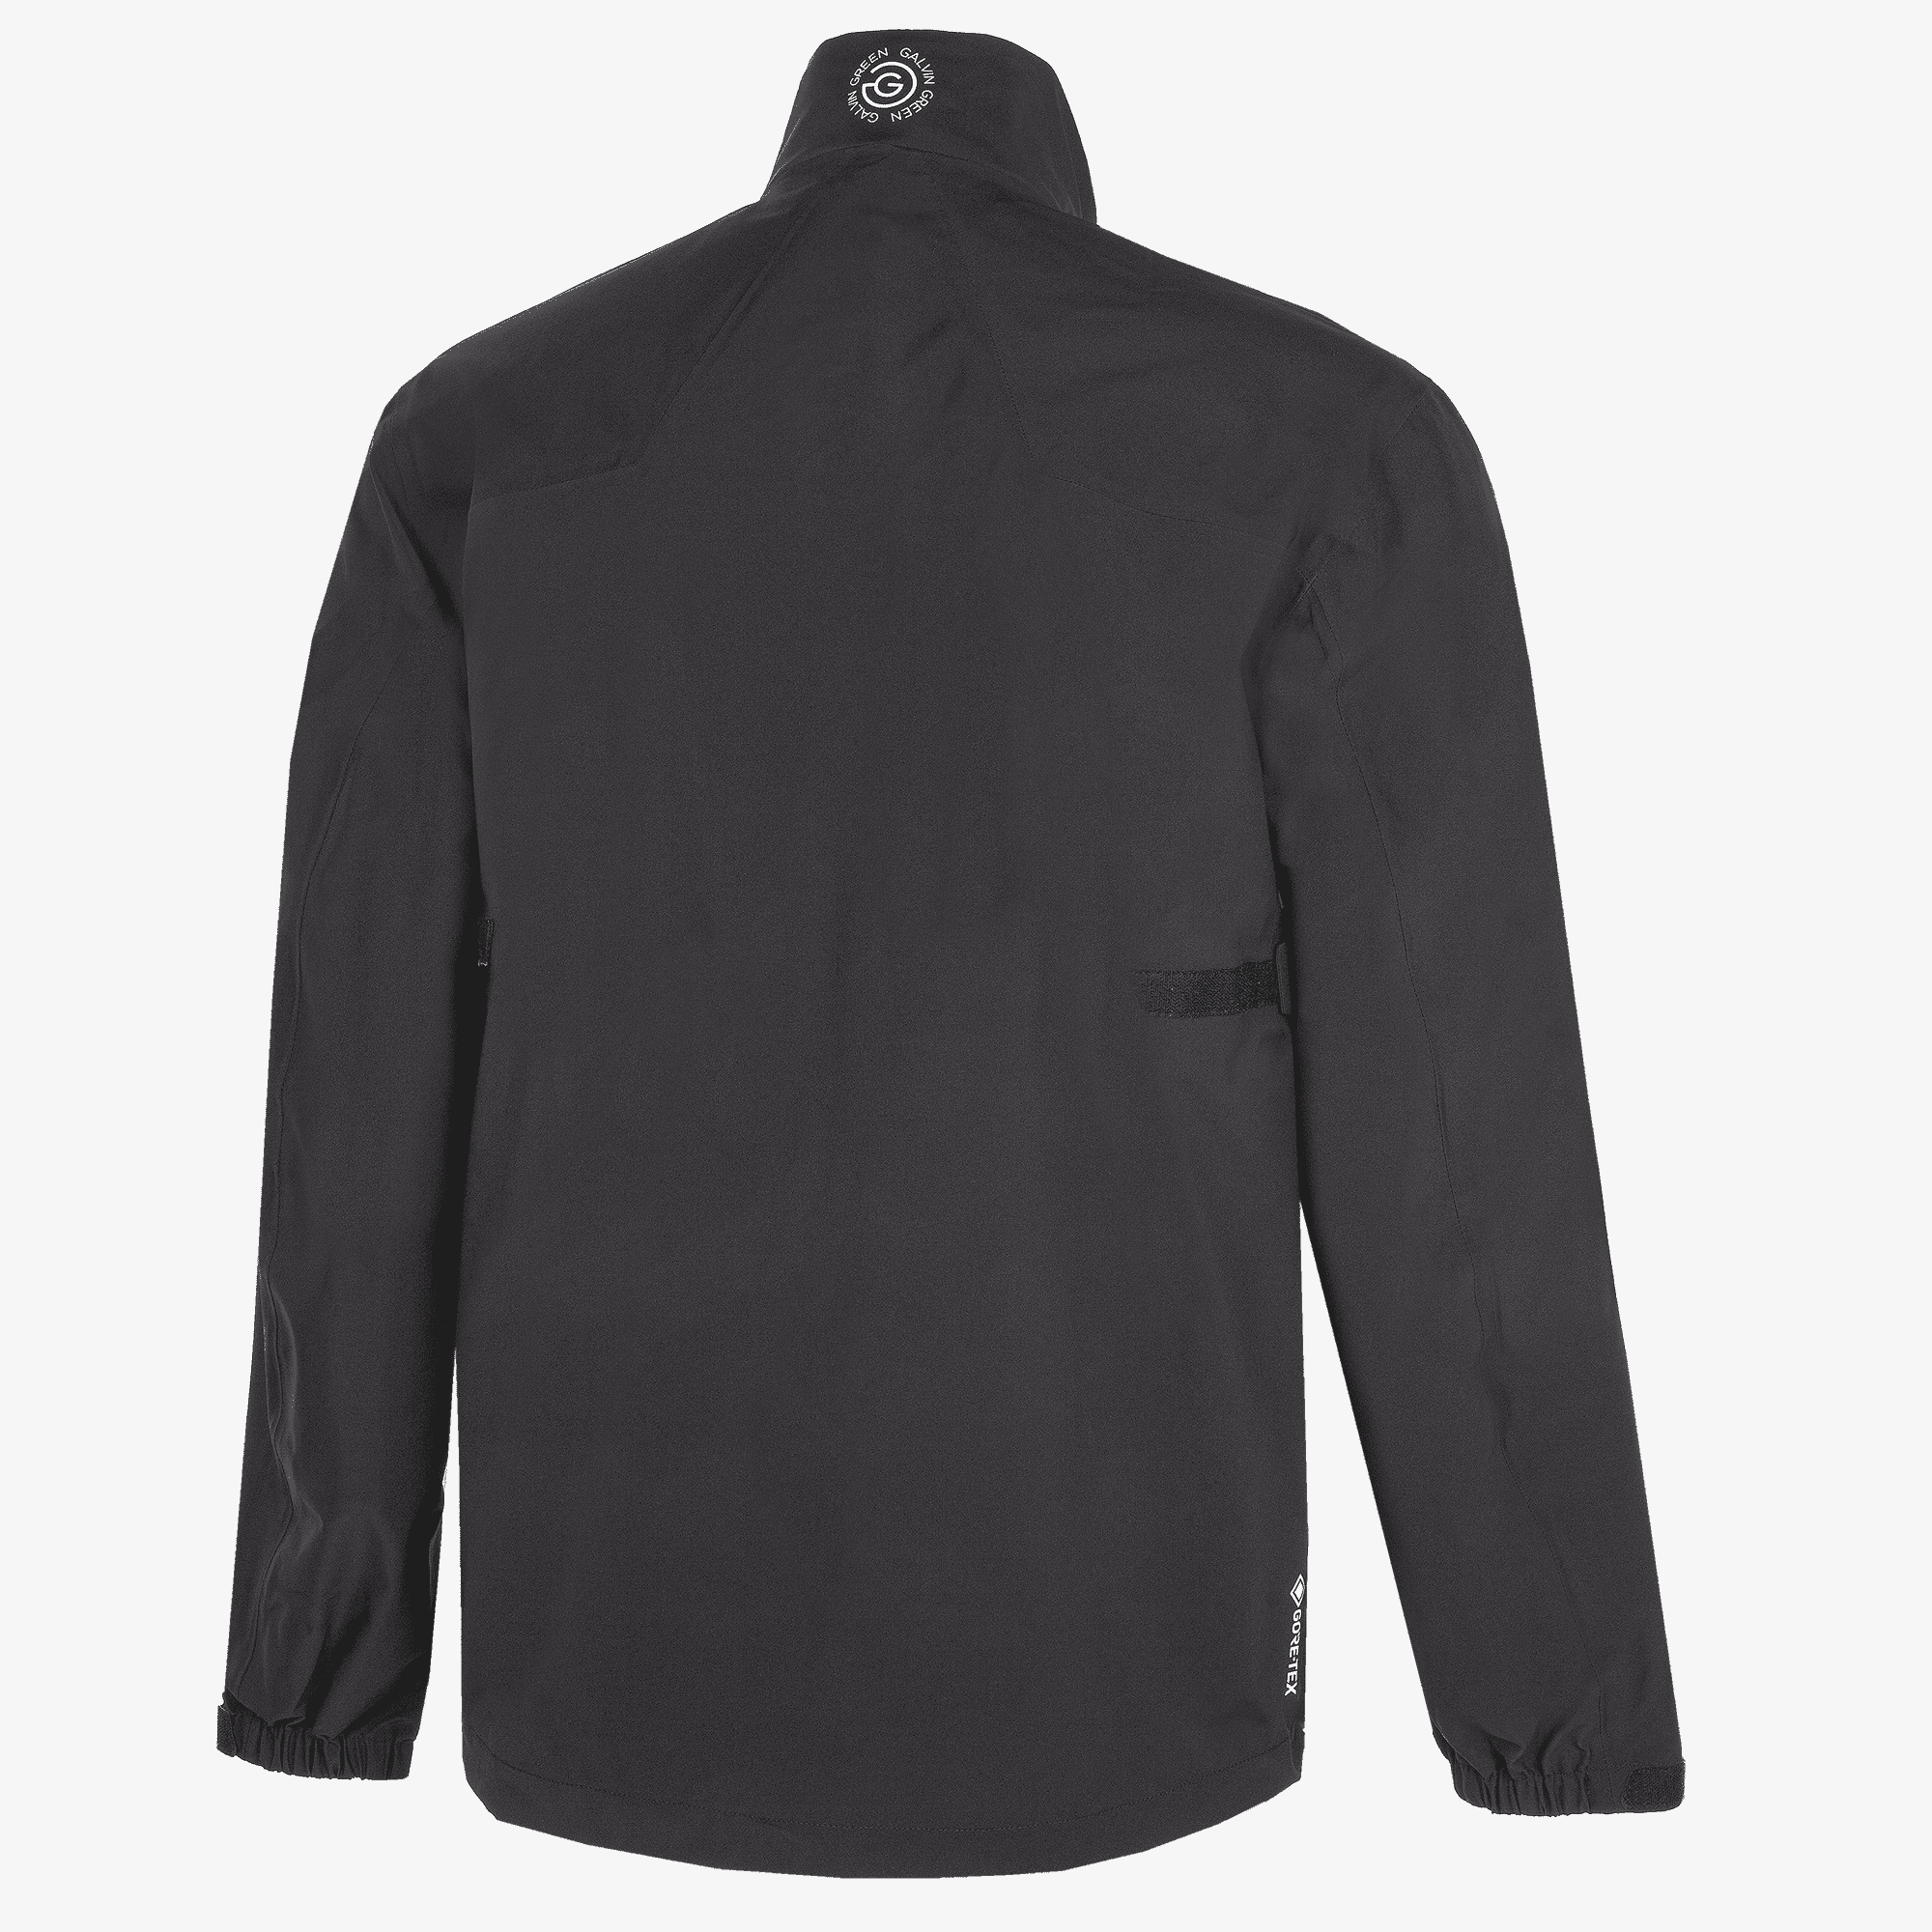 Armstrong Waterproof jacket Black/Sharkskin/Cool Grey – Galvin Green